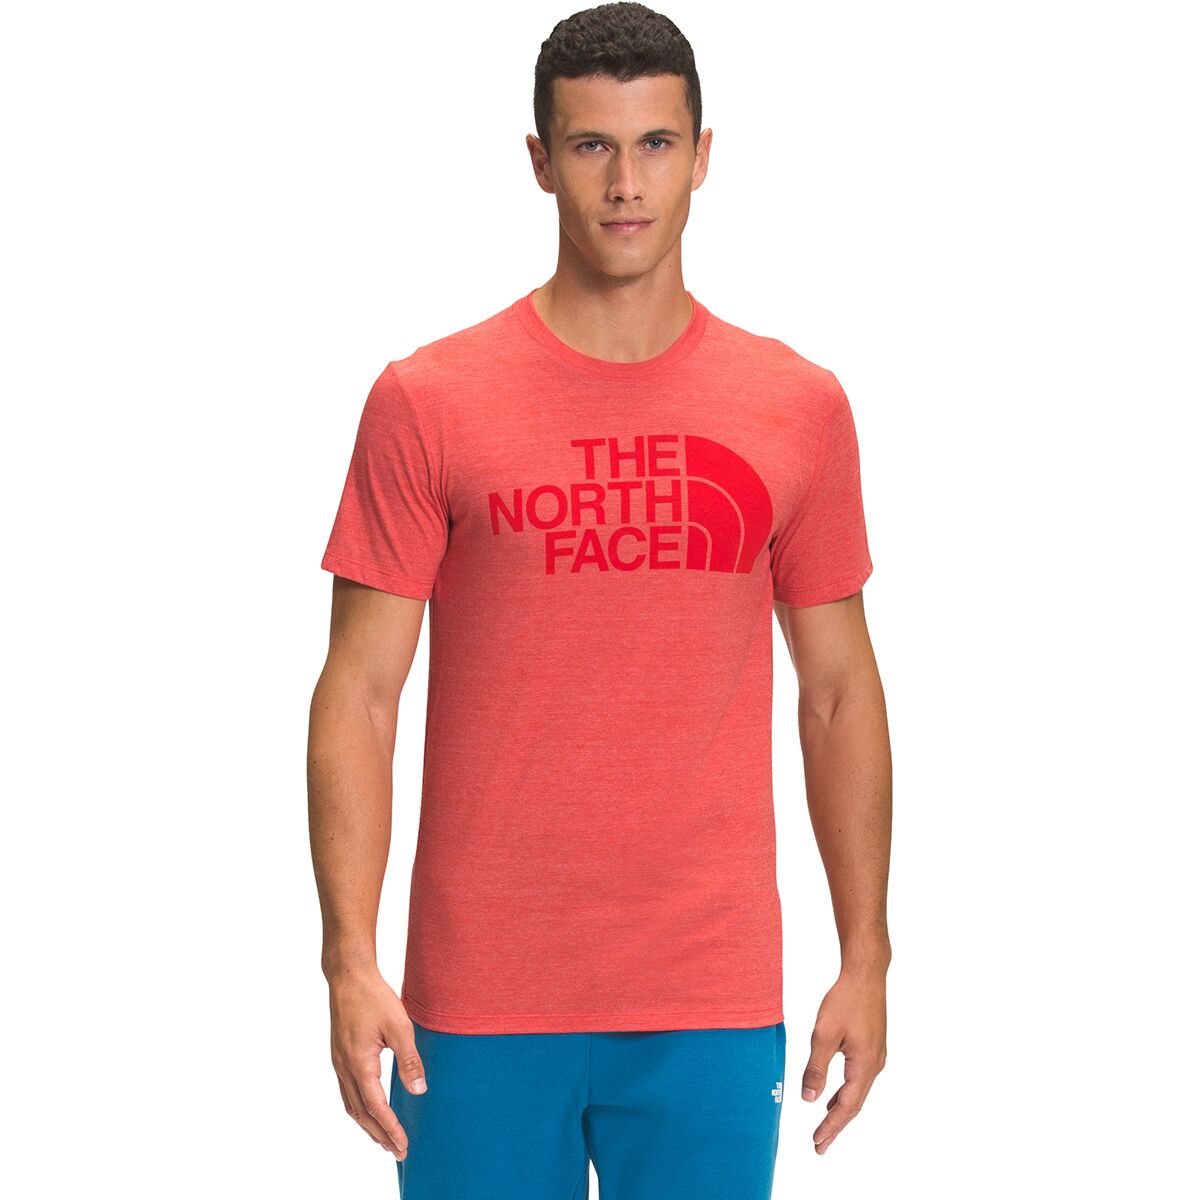 The North Face Half Dome Tri-Blend T-Shirt - Men's